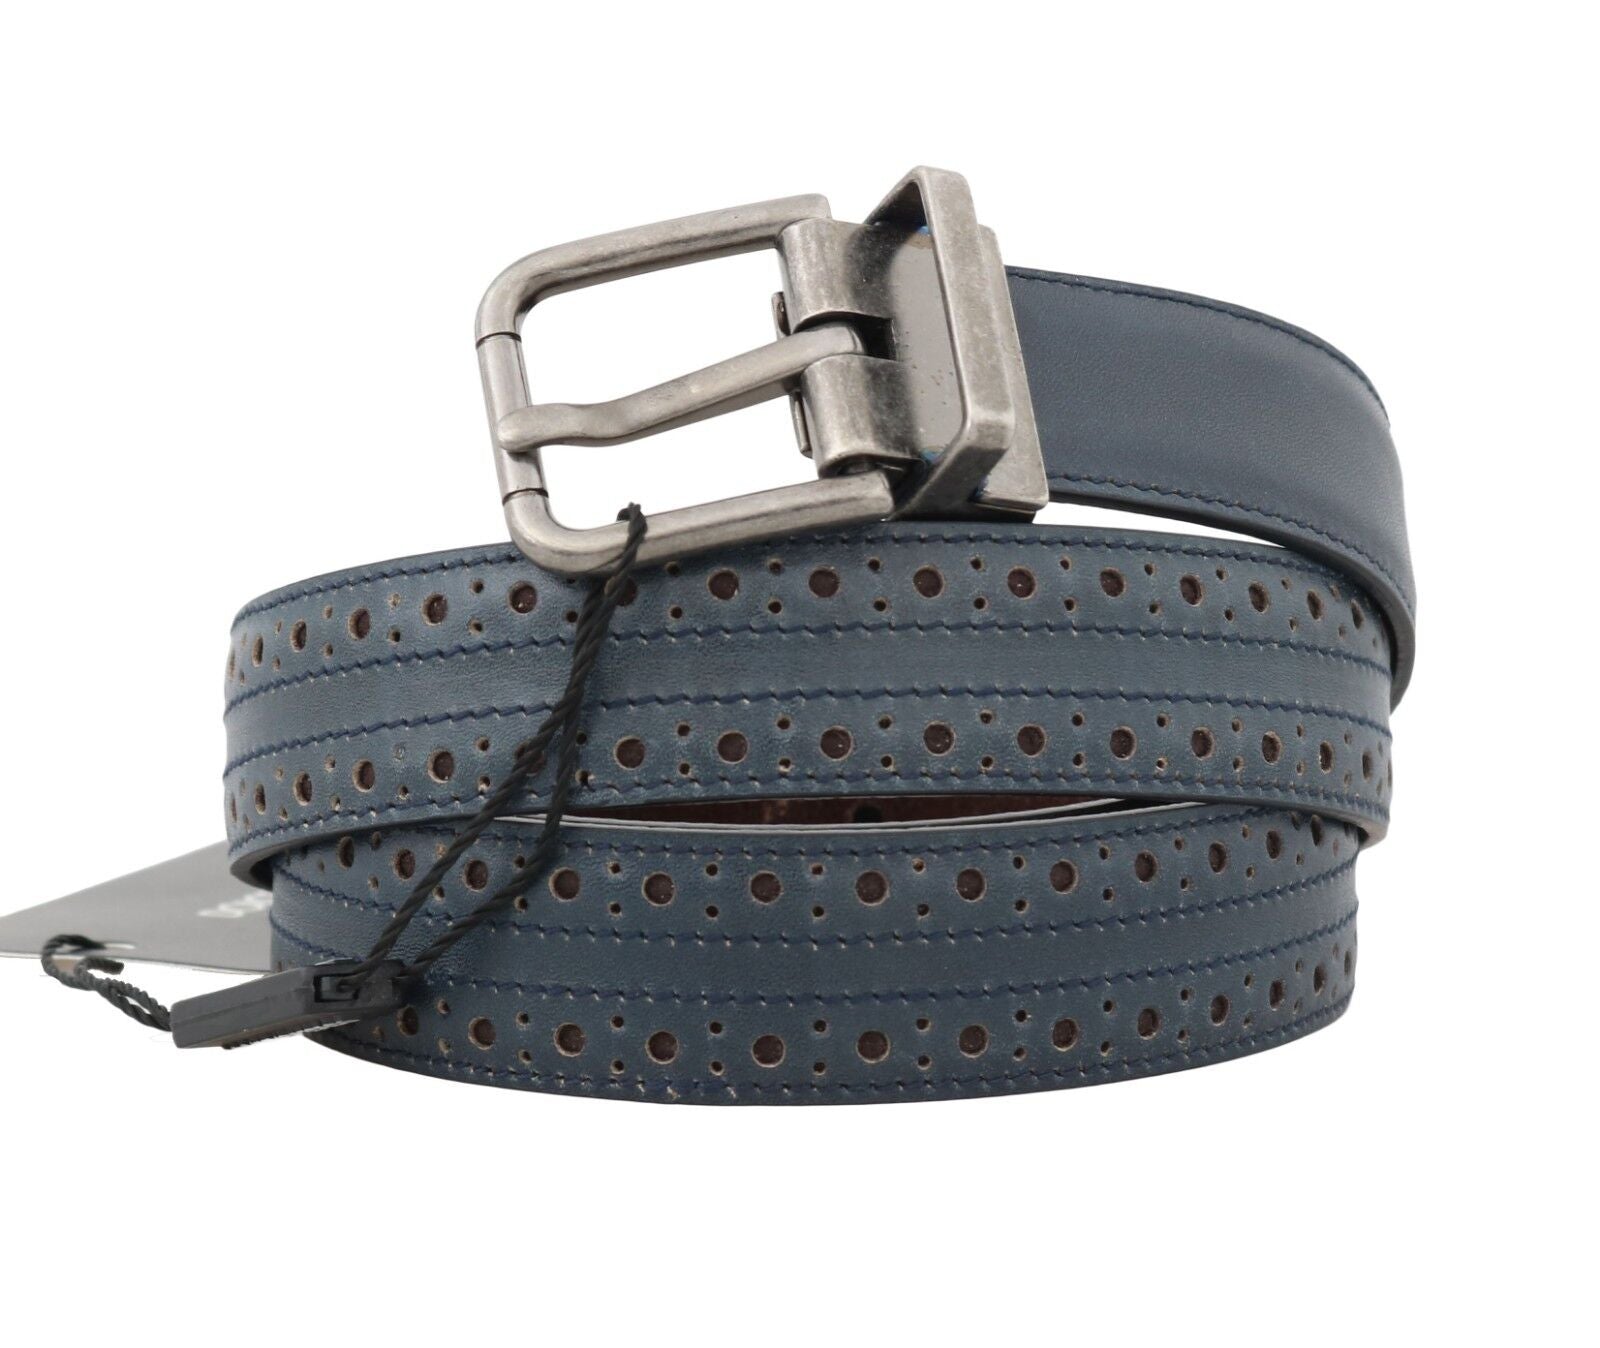 Dolce & Gabbana Elegant Blue Leather Men's Belt